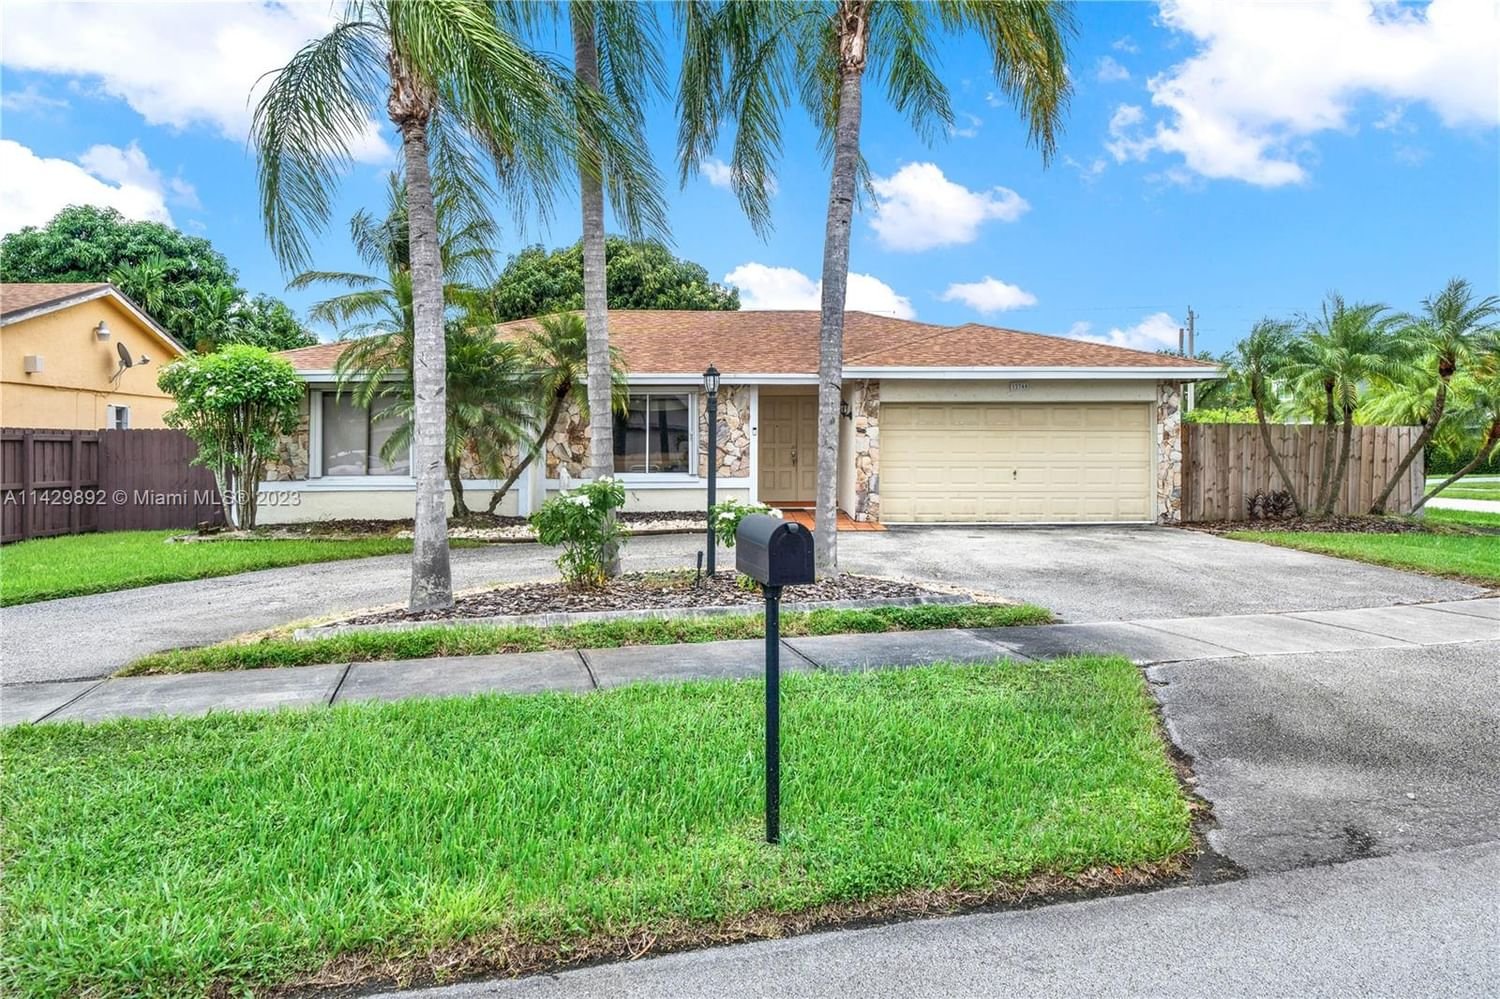 Real estate property located at 12744 119th Ter, Miami-Dade County, Miami, FL